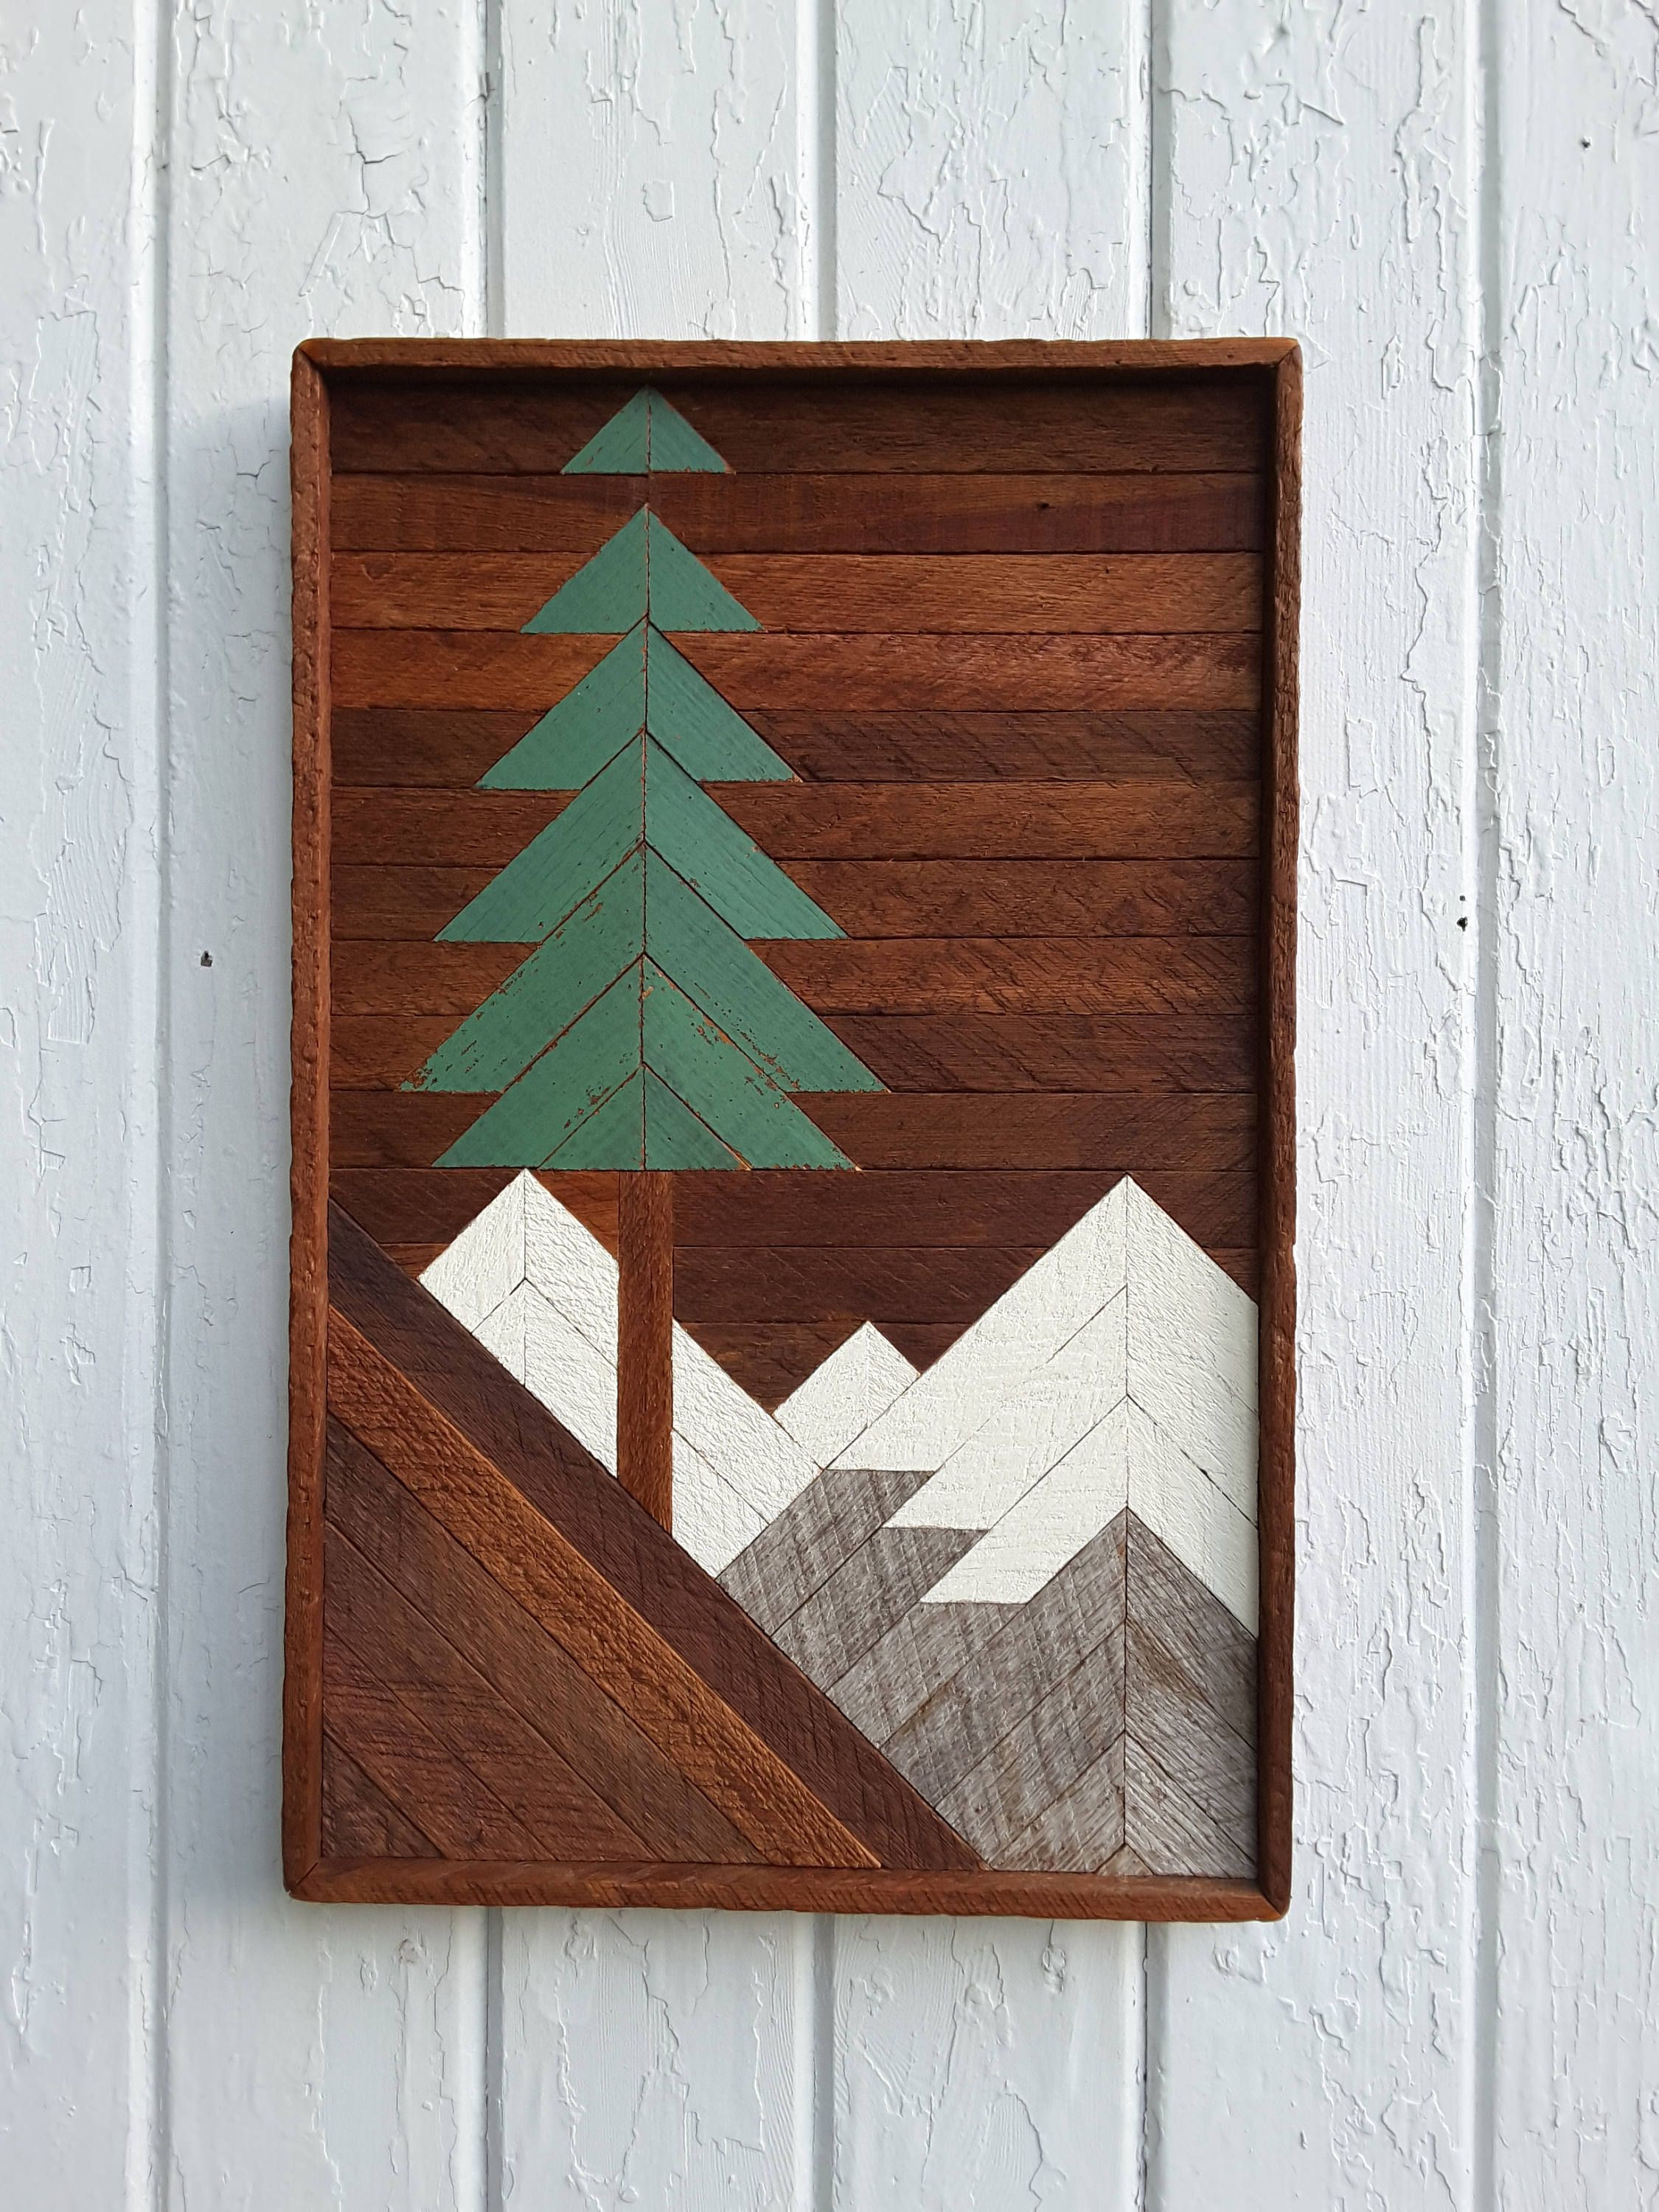 Best ideas about Reclaimed Wood Wall Art DIY
. Save or Pin Reclaimed Wood Wall Art Mountain Pine Tree Scene 20" by Now.